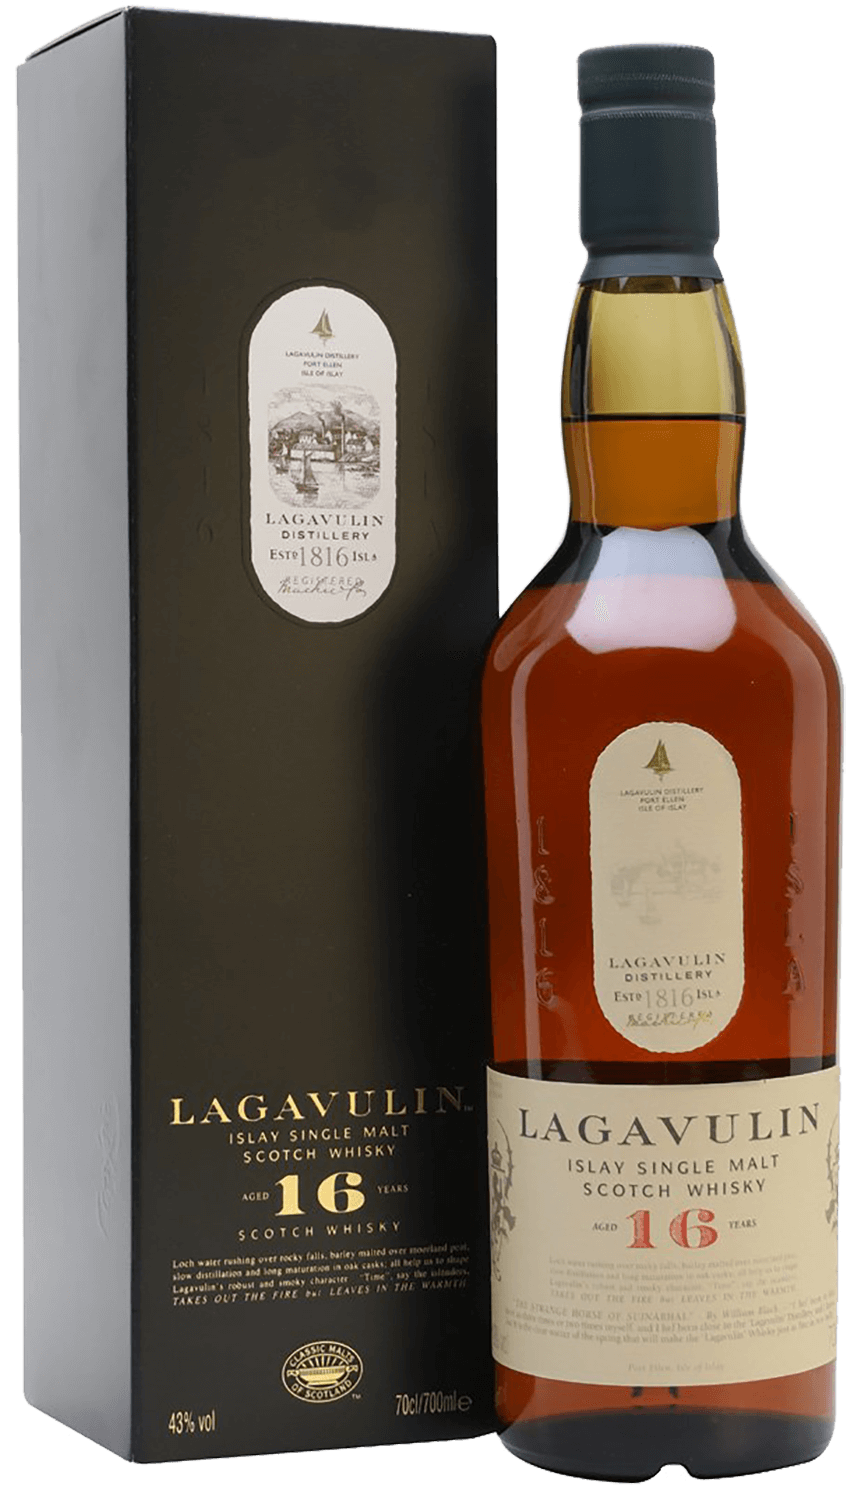 Lagavulin Islay single malt scotch whisky 16 Years Old (gift box) bruichladdich octomore 10 years islay single malt scotch whisky gift box